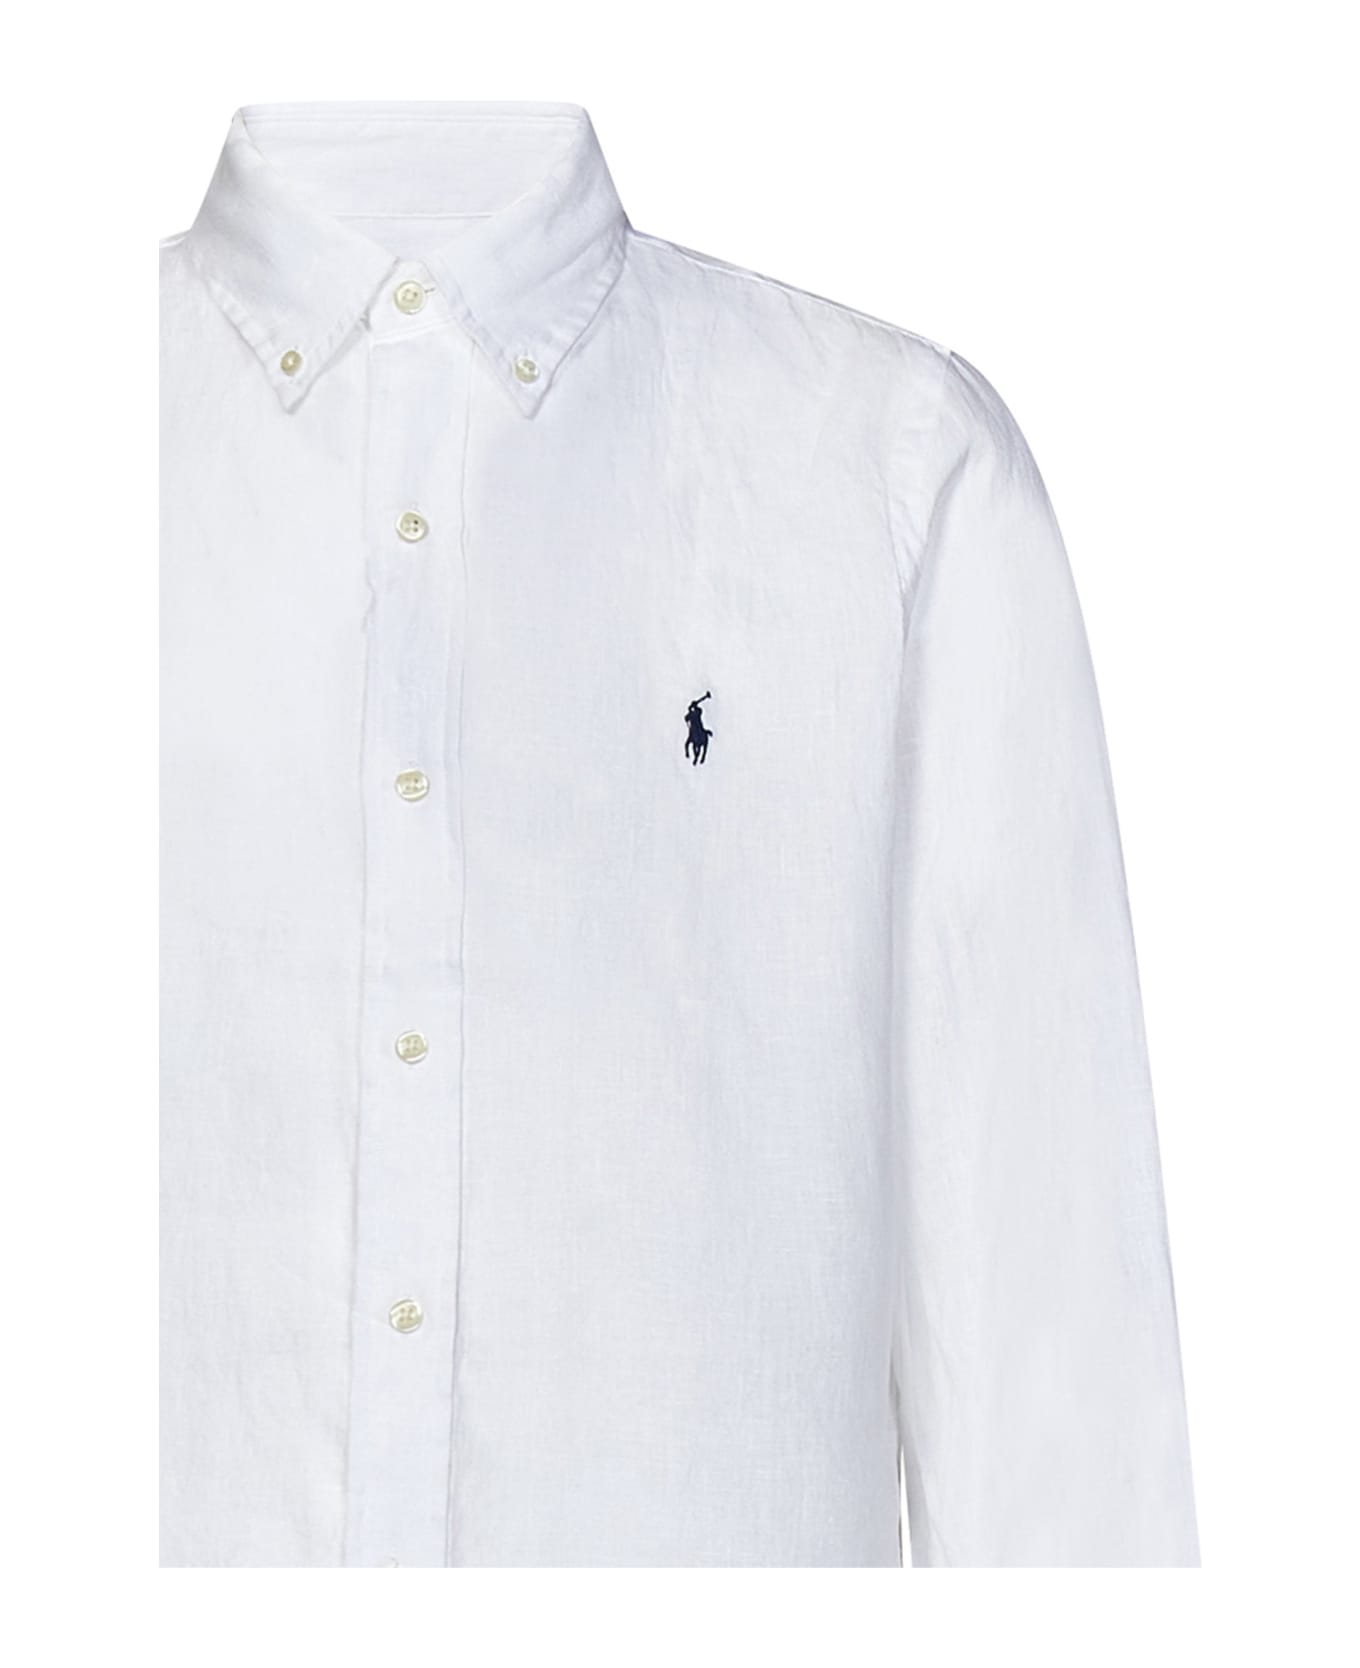 Ralph Lauren Shirt - white